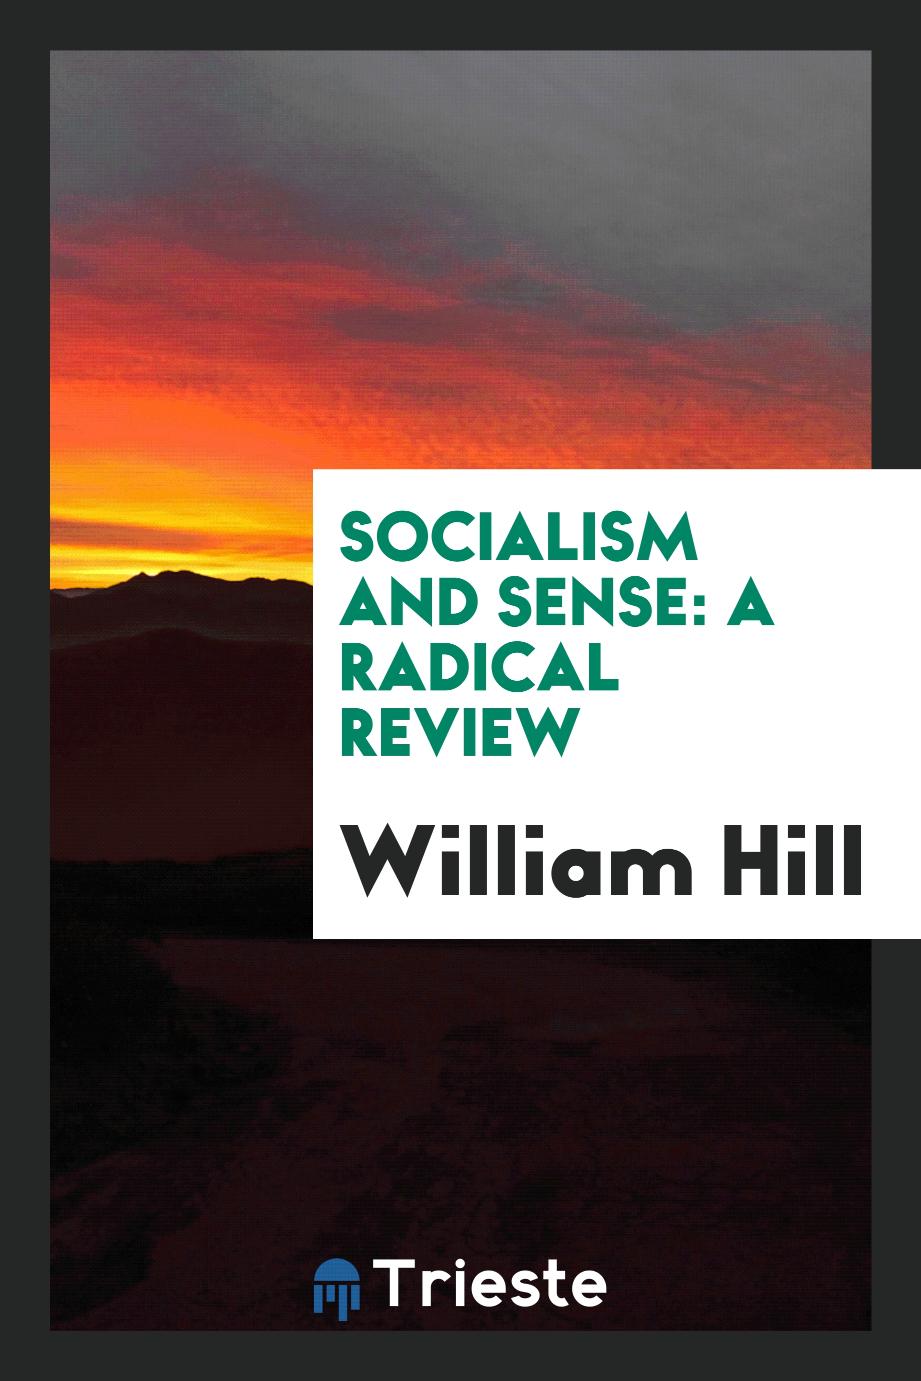 Socialism and sense: a radical review